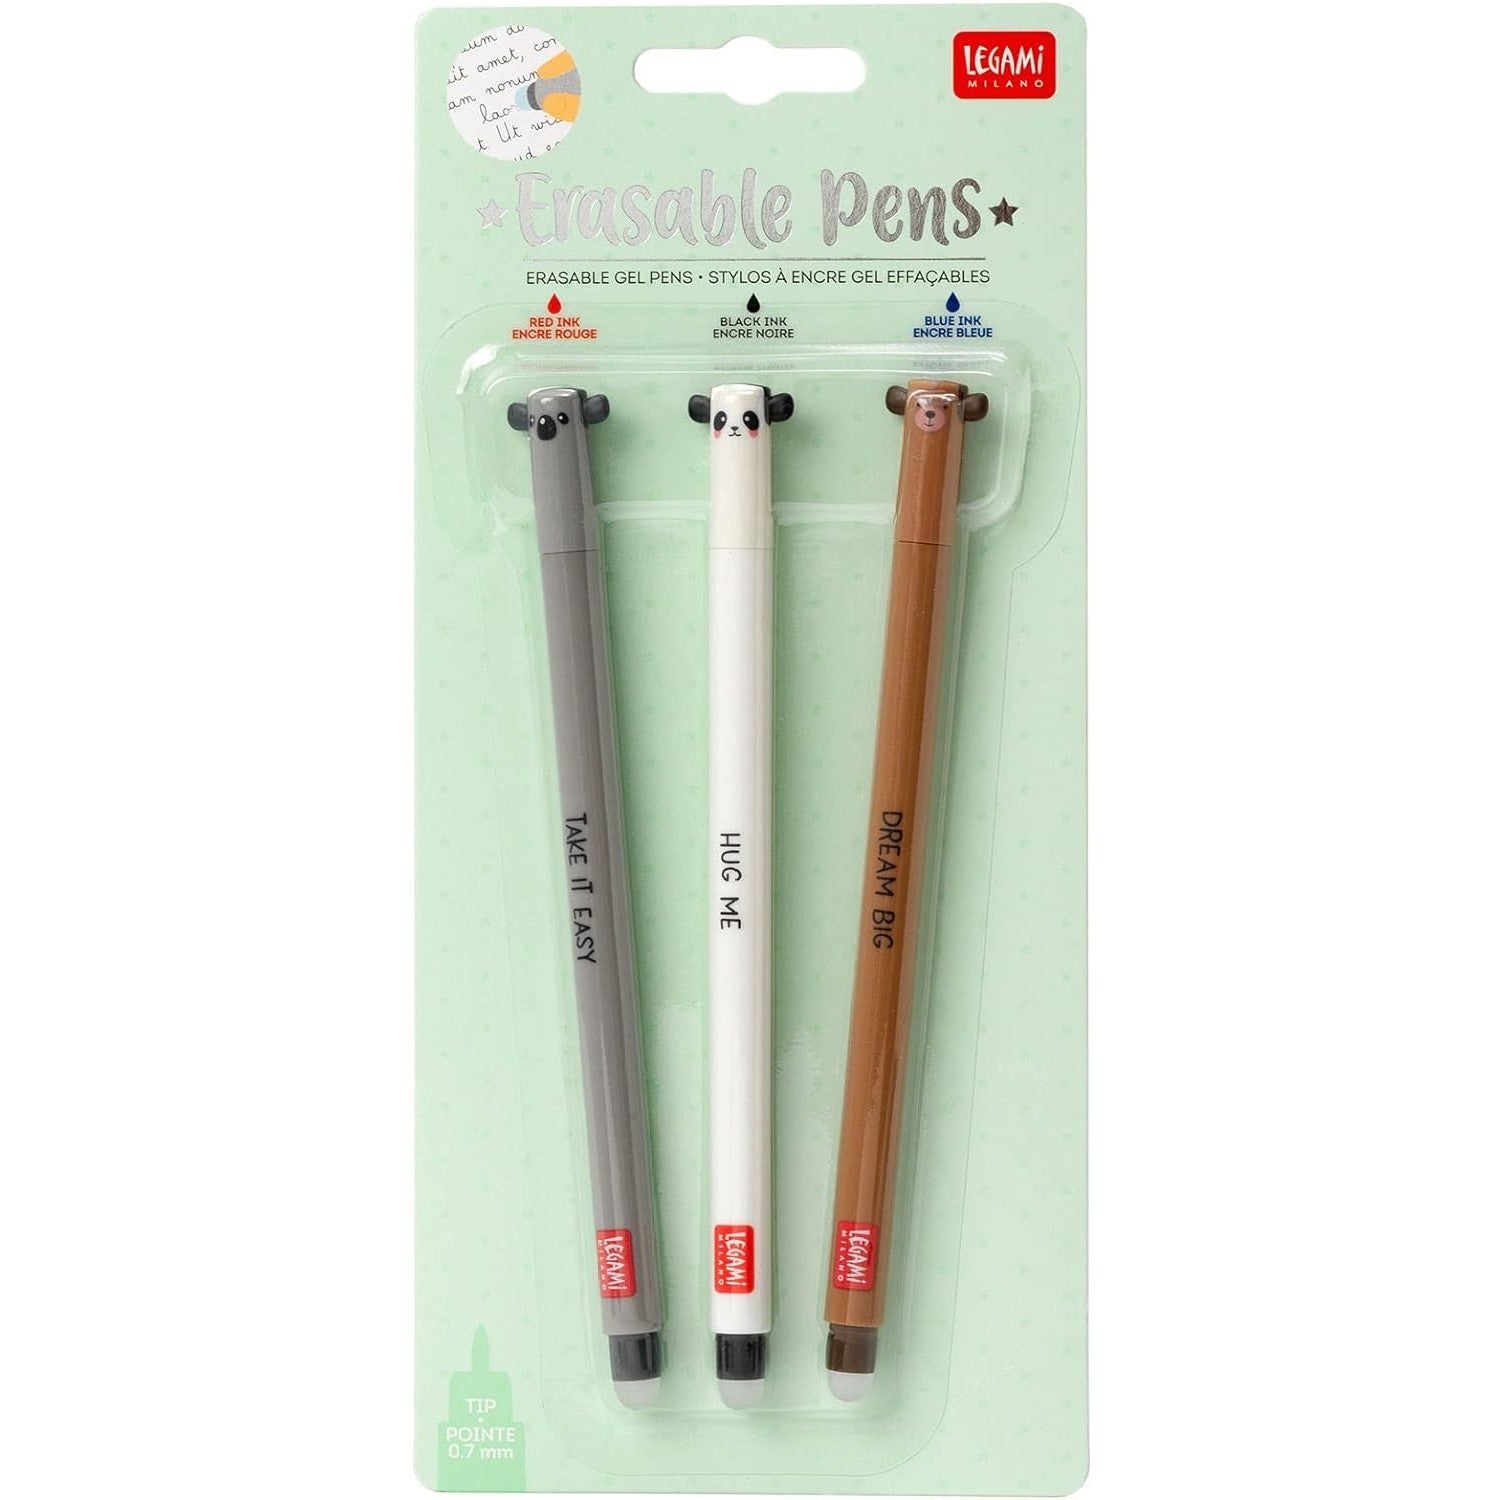 Legami Erasable Gel Pen Set of 3 - Cutie Friends